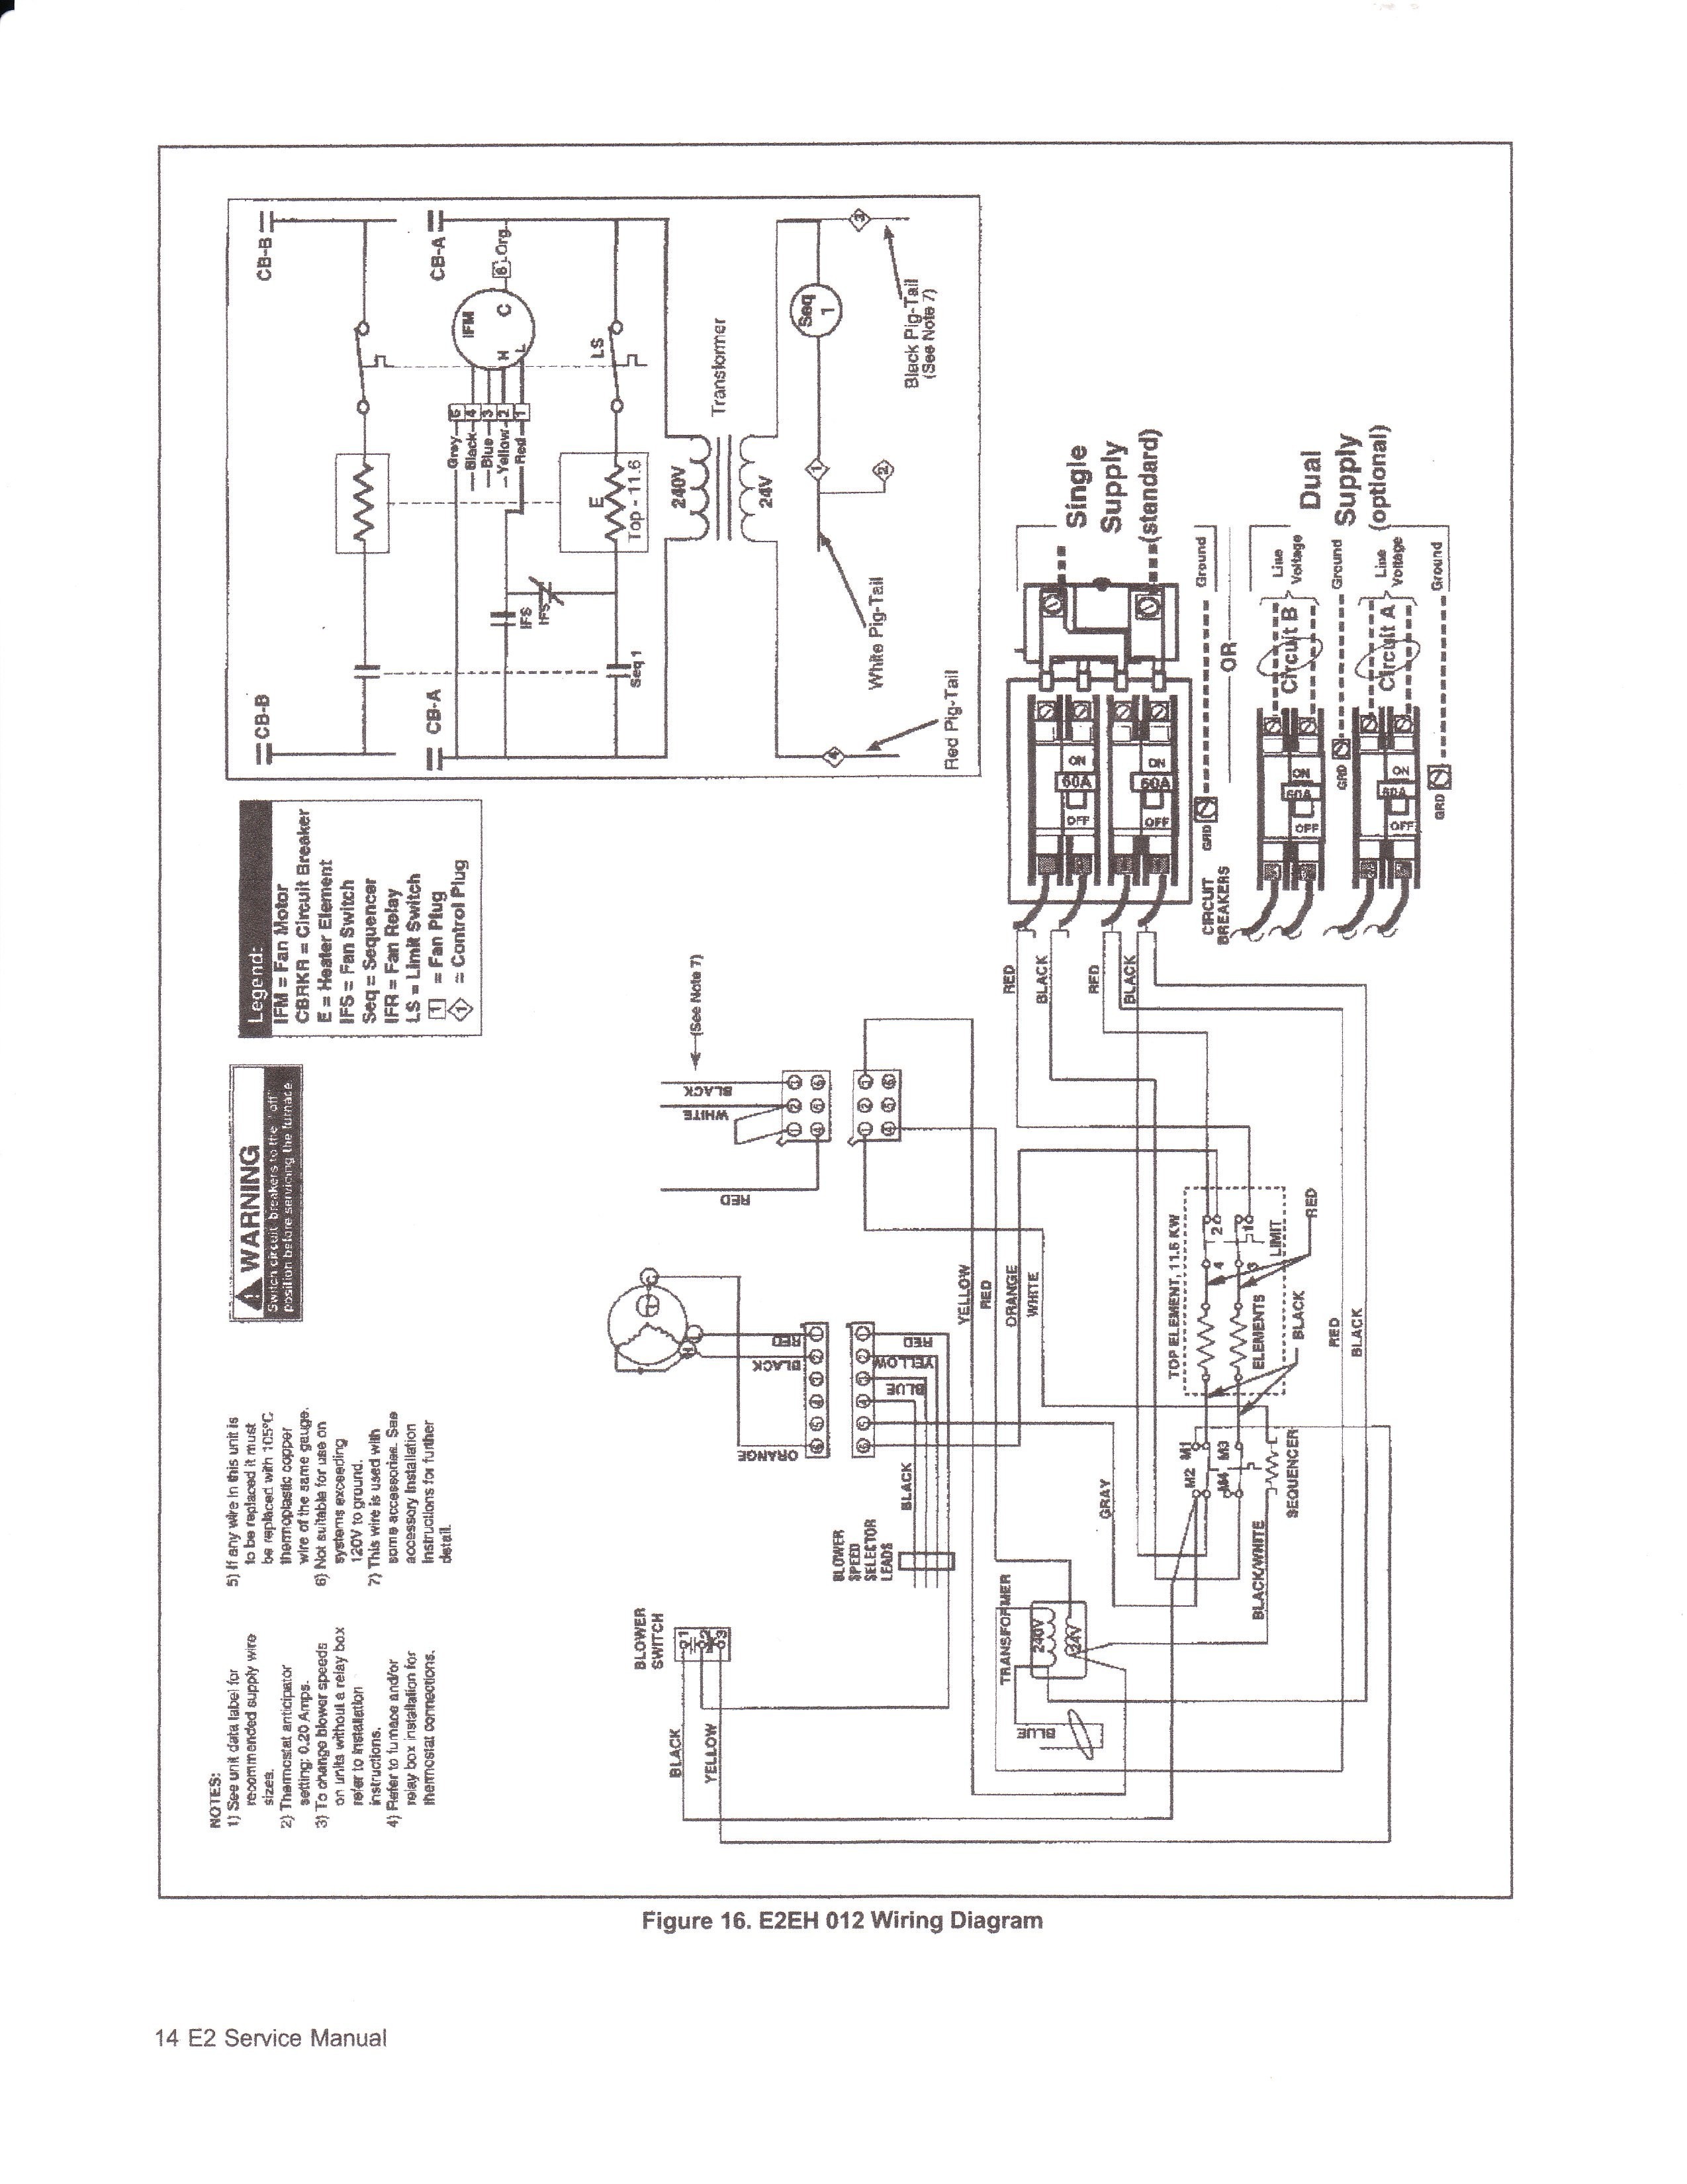 Nordyne Wiring Diagram Electric Furnace New Intertherm Electric Furnace Wiring Diagram for nordyne Heat Pump